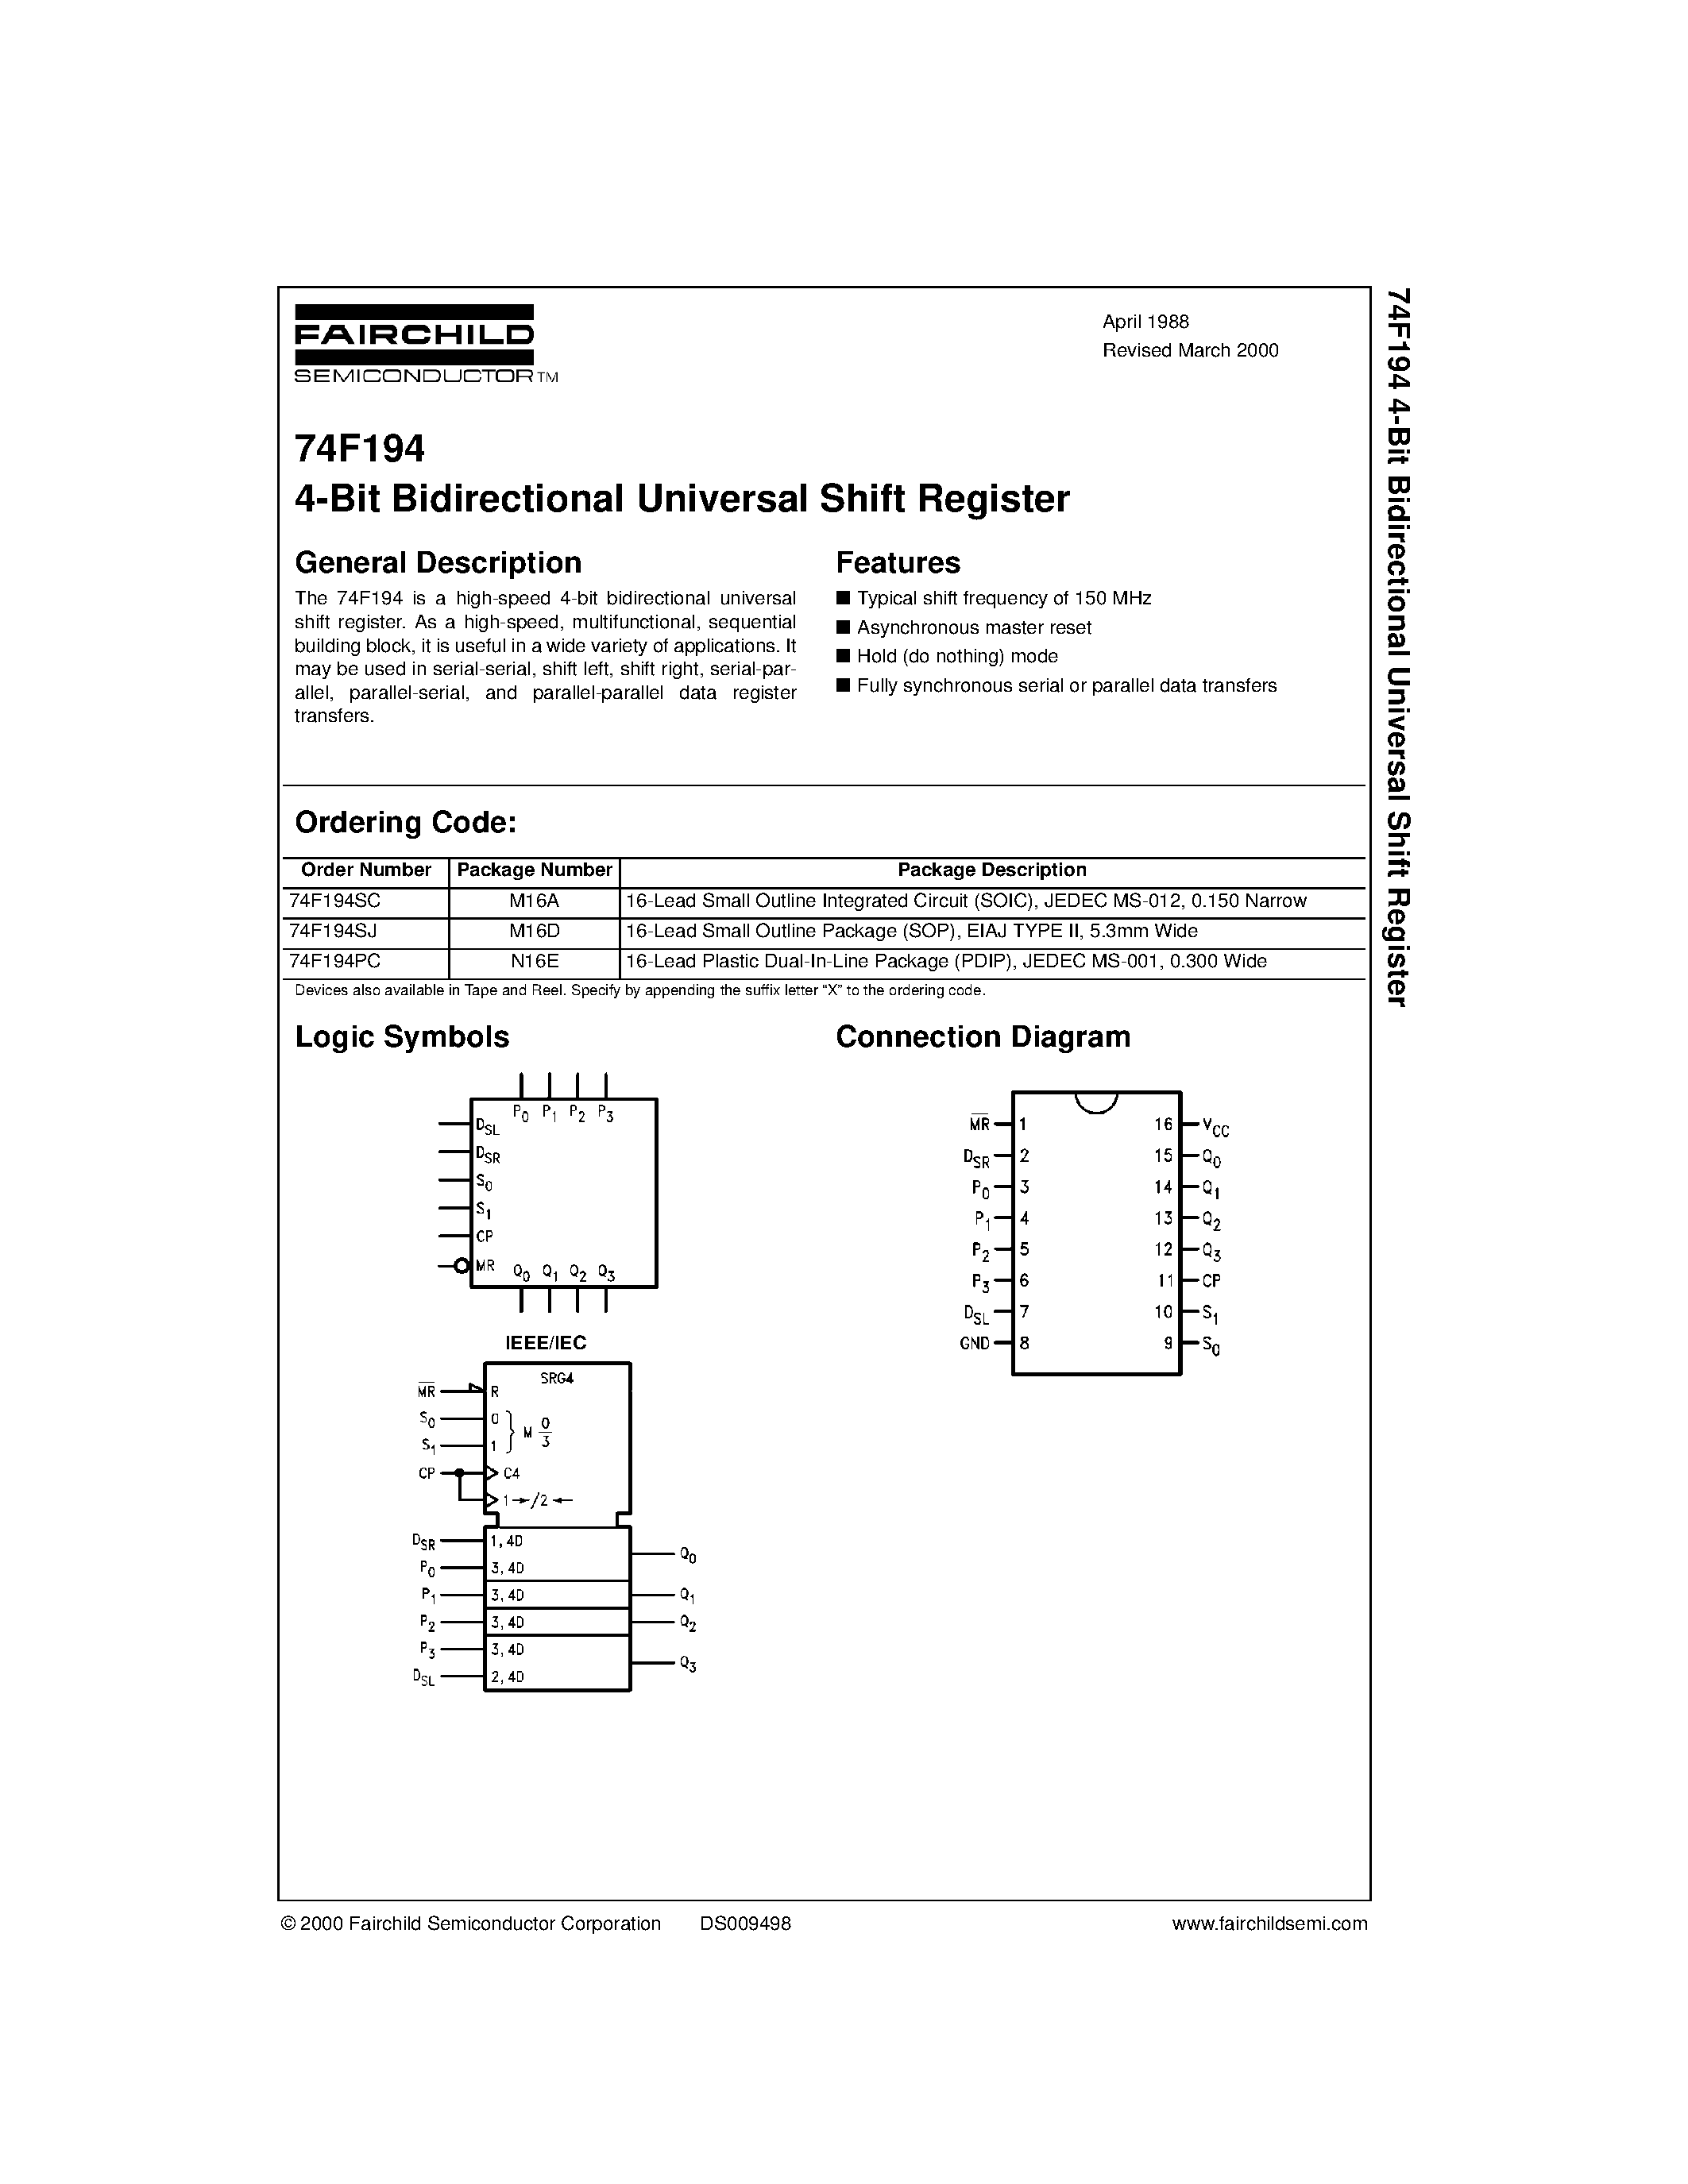 Datasheet 74F194SJ - 4-Bit Bidirectional Universal Shift Register page 1